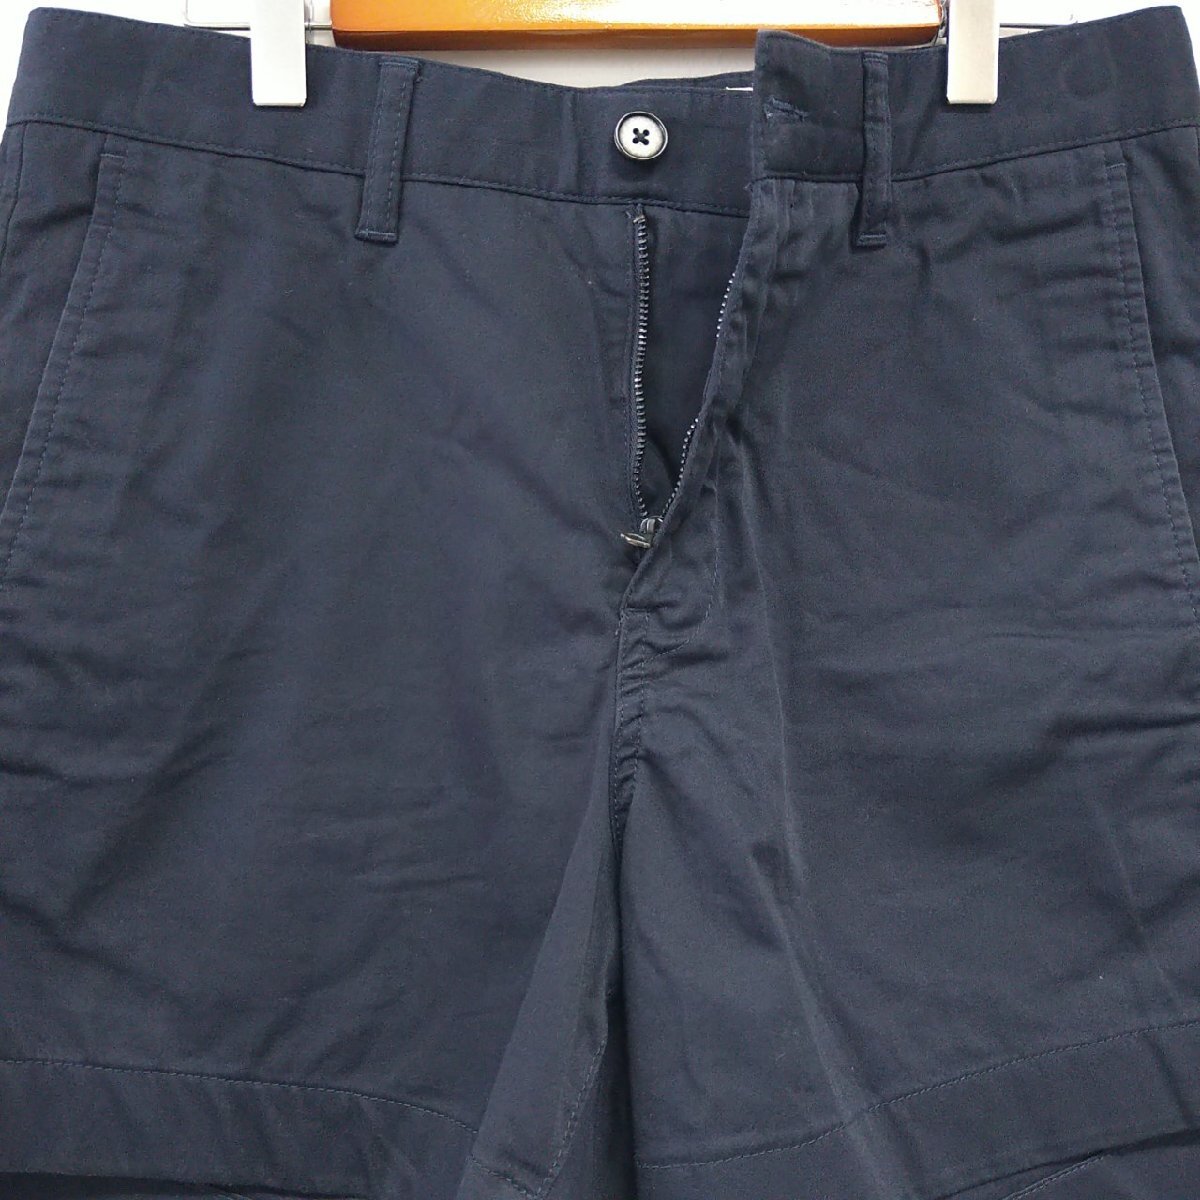 (^w^)b Acne Studios SEYMOUR SATIN PSS15 Acne s Today oz stretch chino shorts short pants navy 46 8497wE